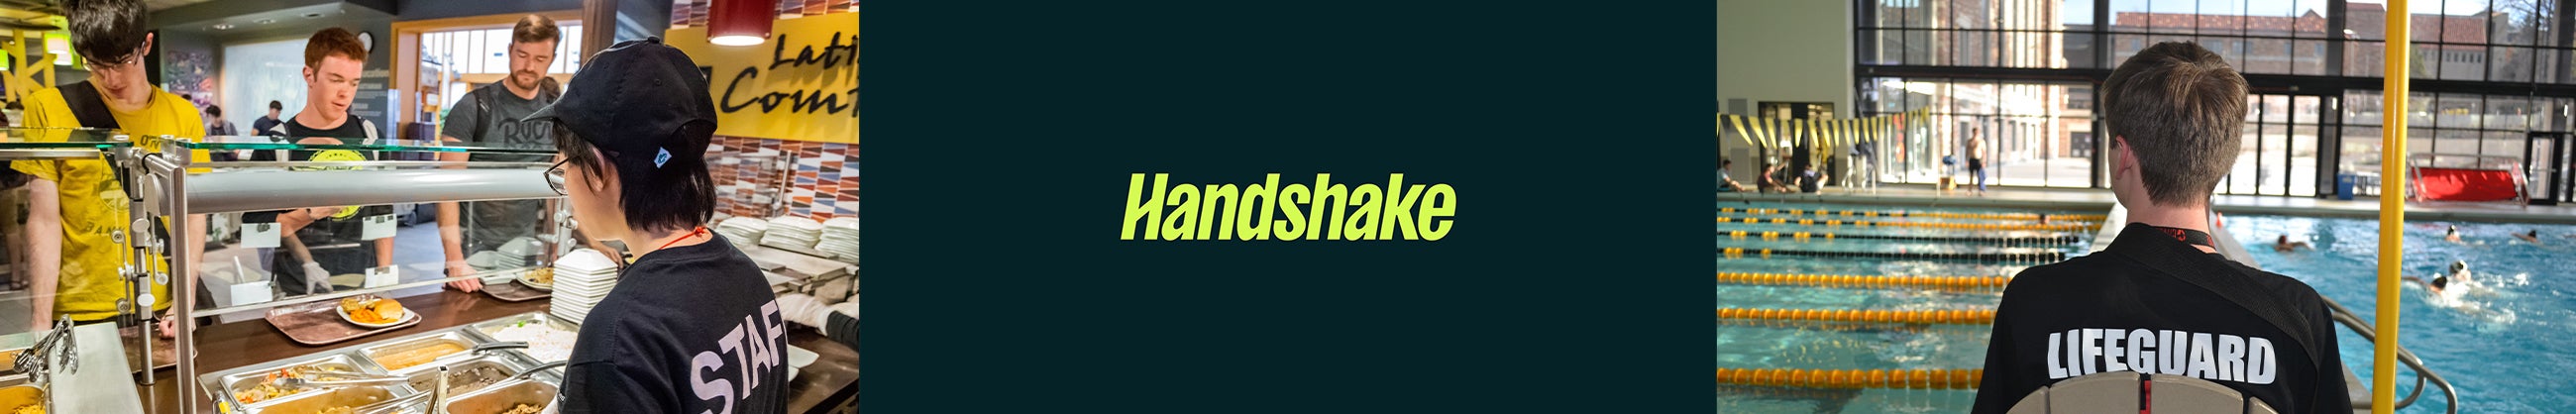 Handshake logo and students at work photos